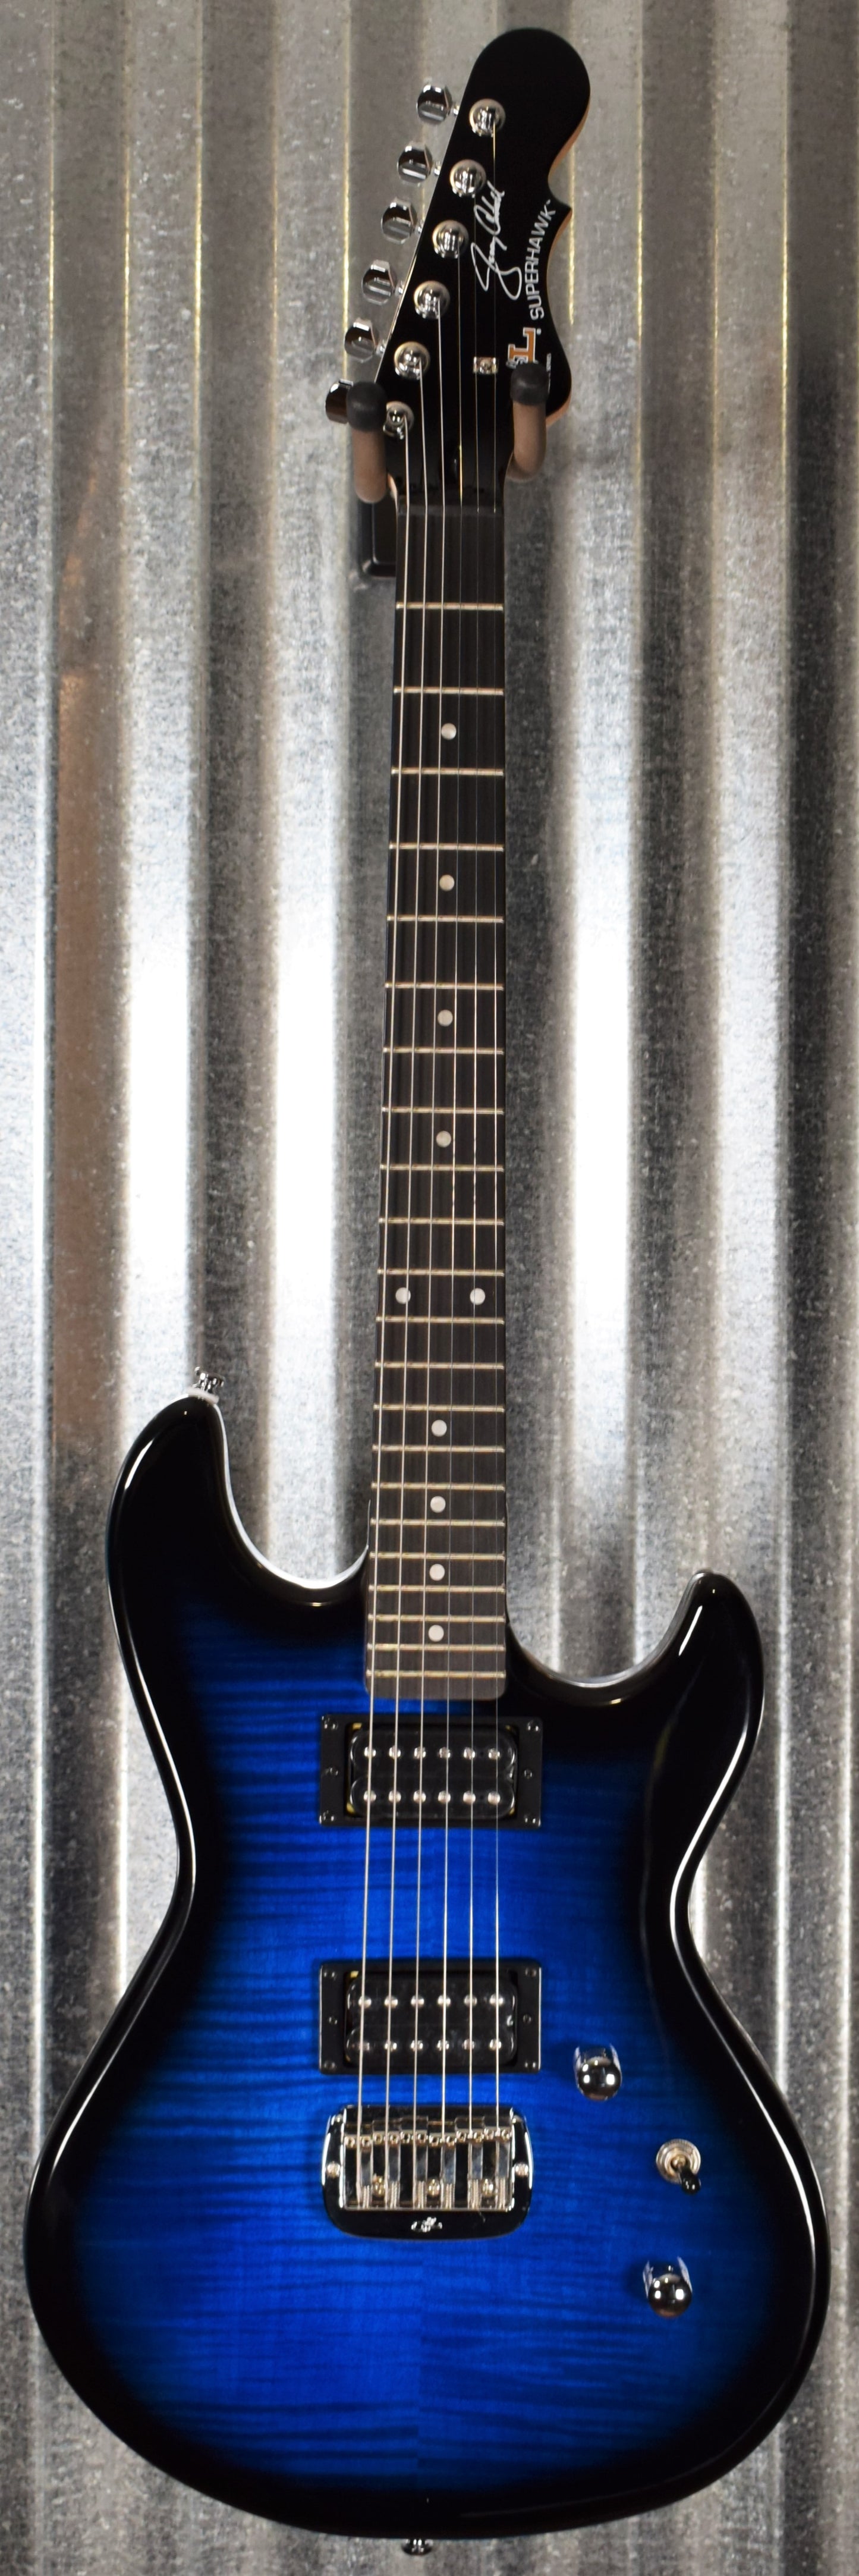 G&L Tribute Jerry Cantrell Superhawk Blue Burst Guitar #3270 Demo